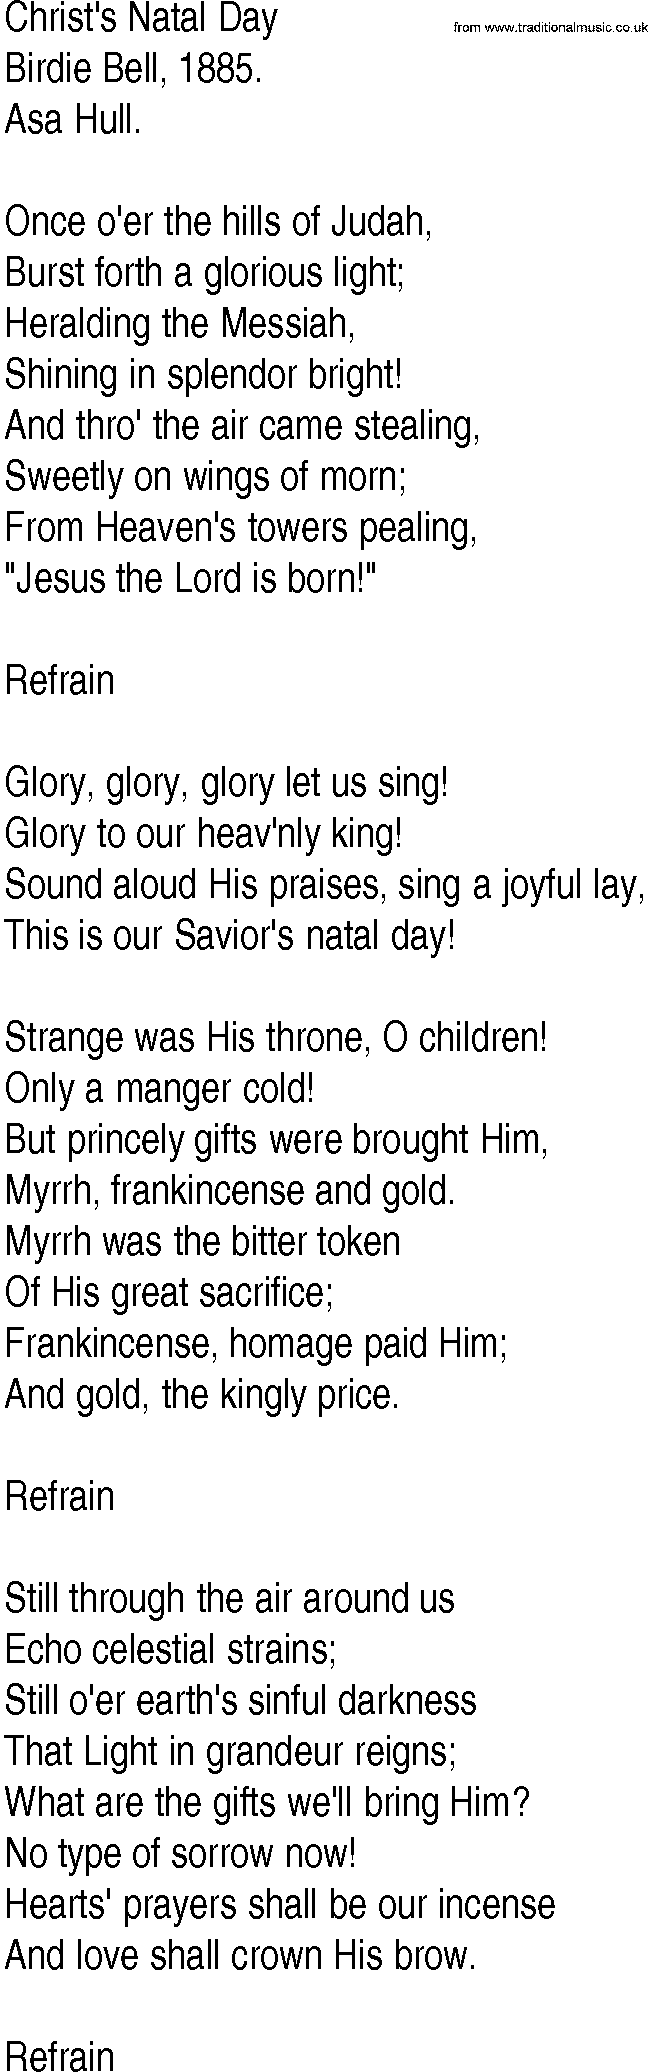 Hymn and Gospel Song: Christ's Natal Day by Birdie Bell lyrics